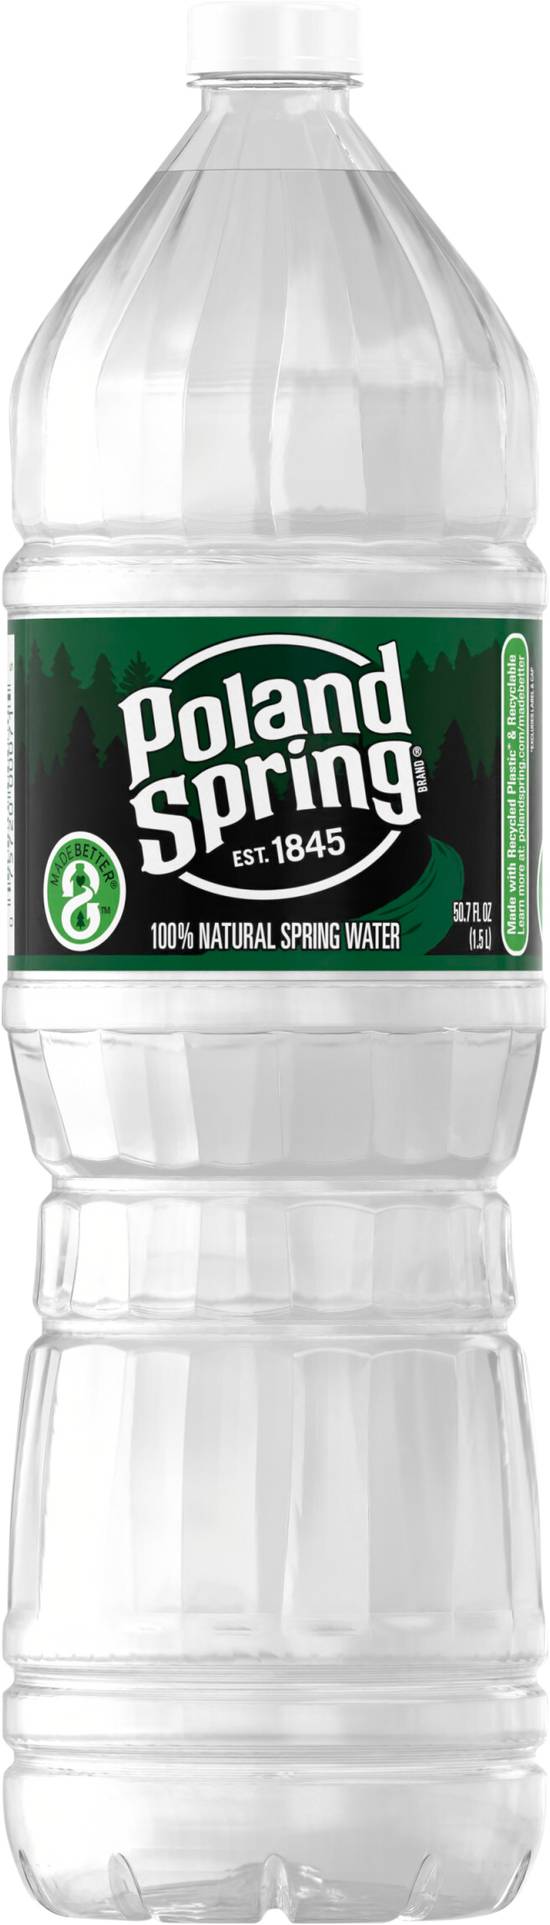 Poland Spring 100% Natural Spring Water (50.7 fl oz)